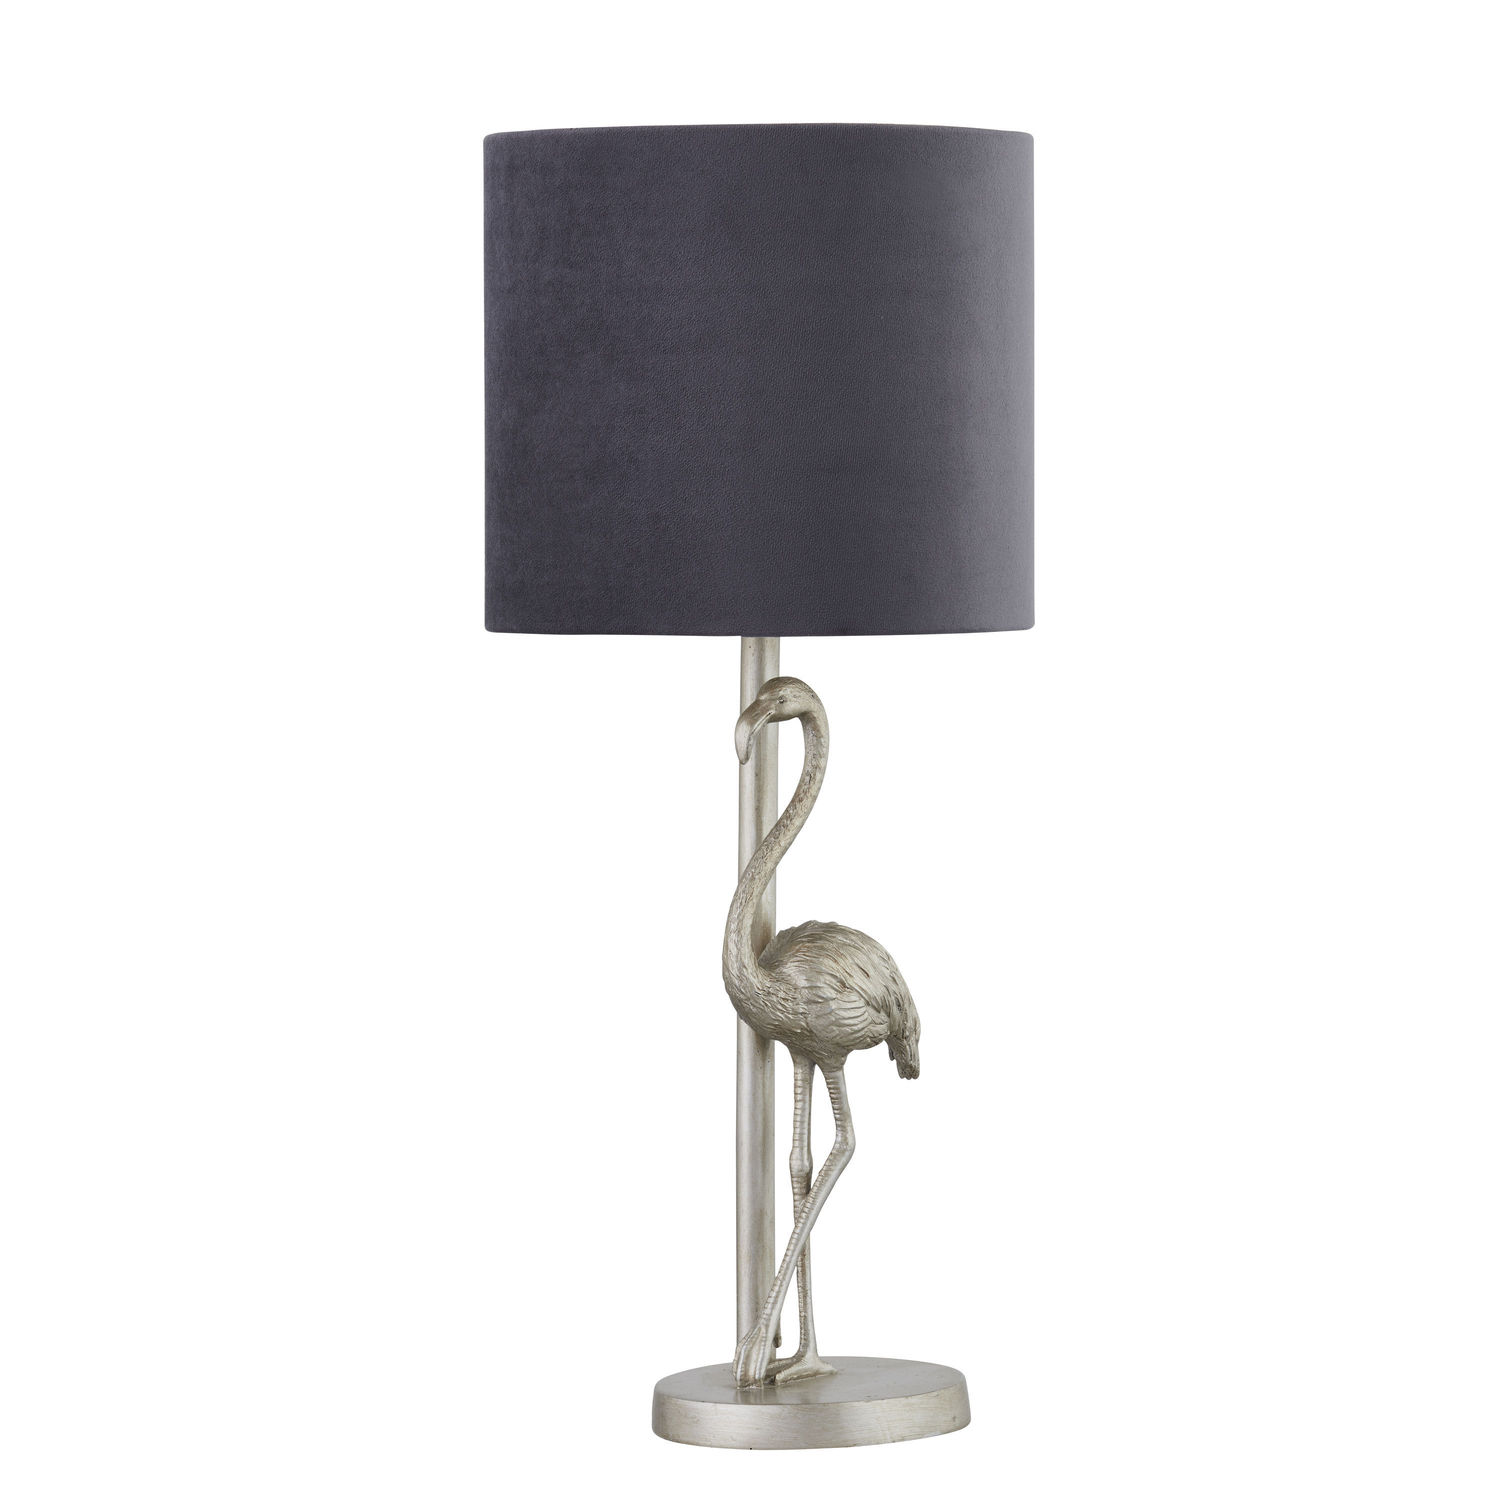 Flamingo Silver Lamp With Grey Shade - Image 1